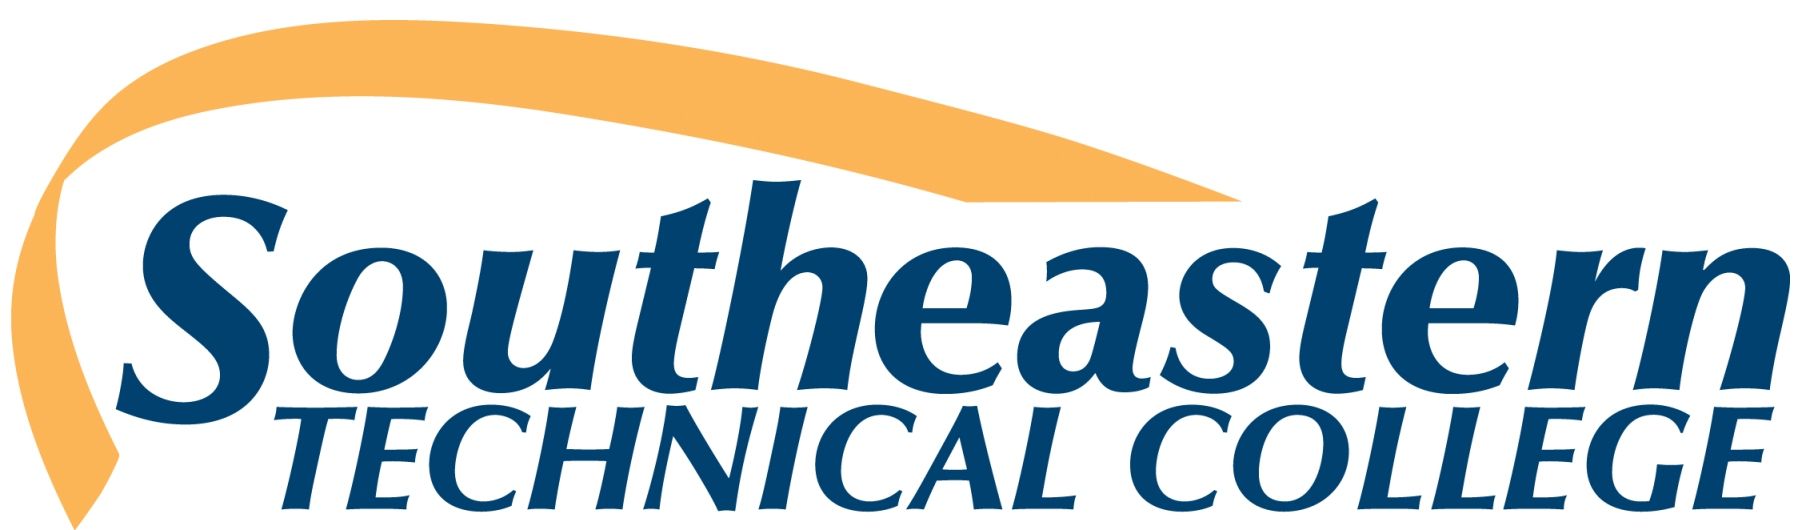 School logo for Southeastern Technical College in Vidalia GA